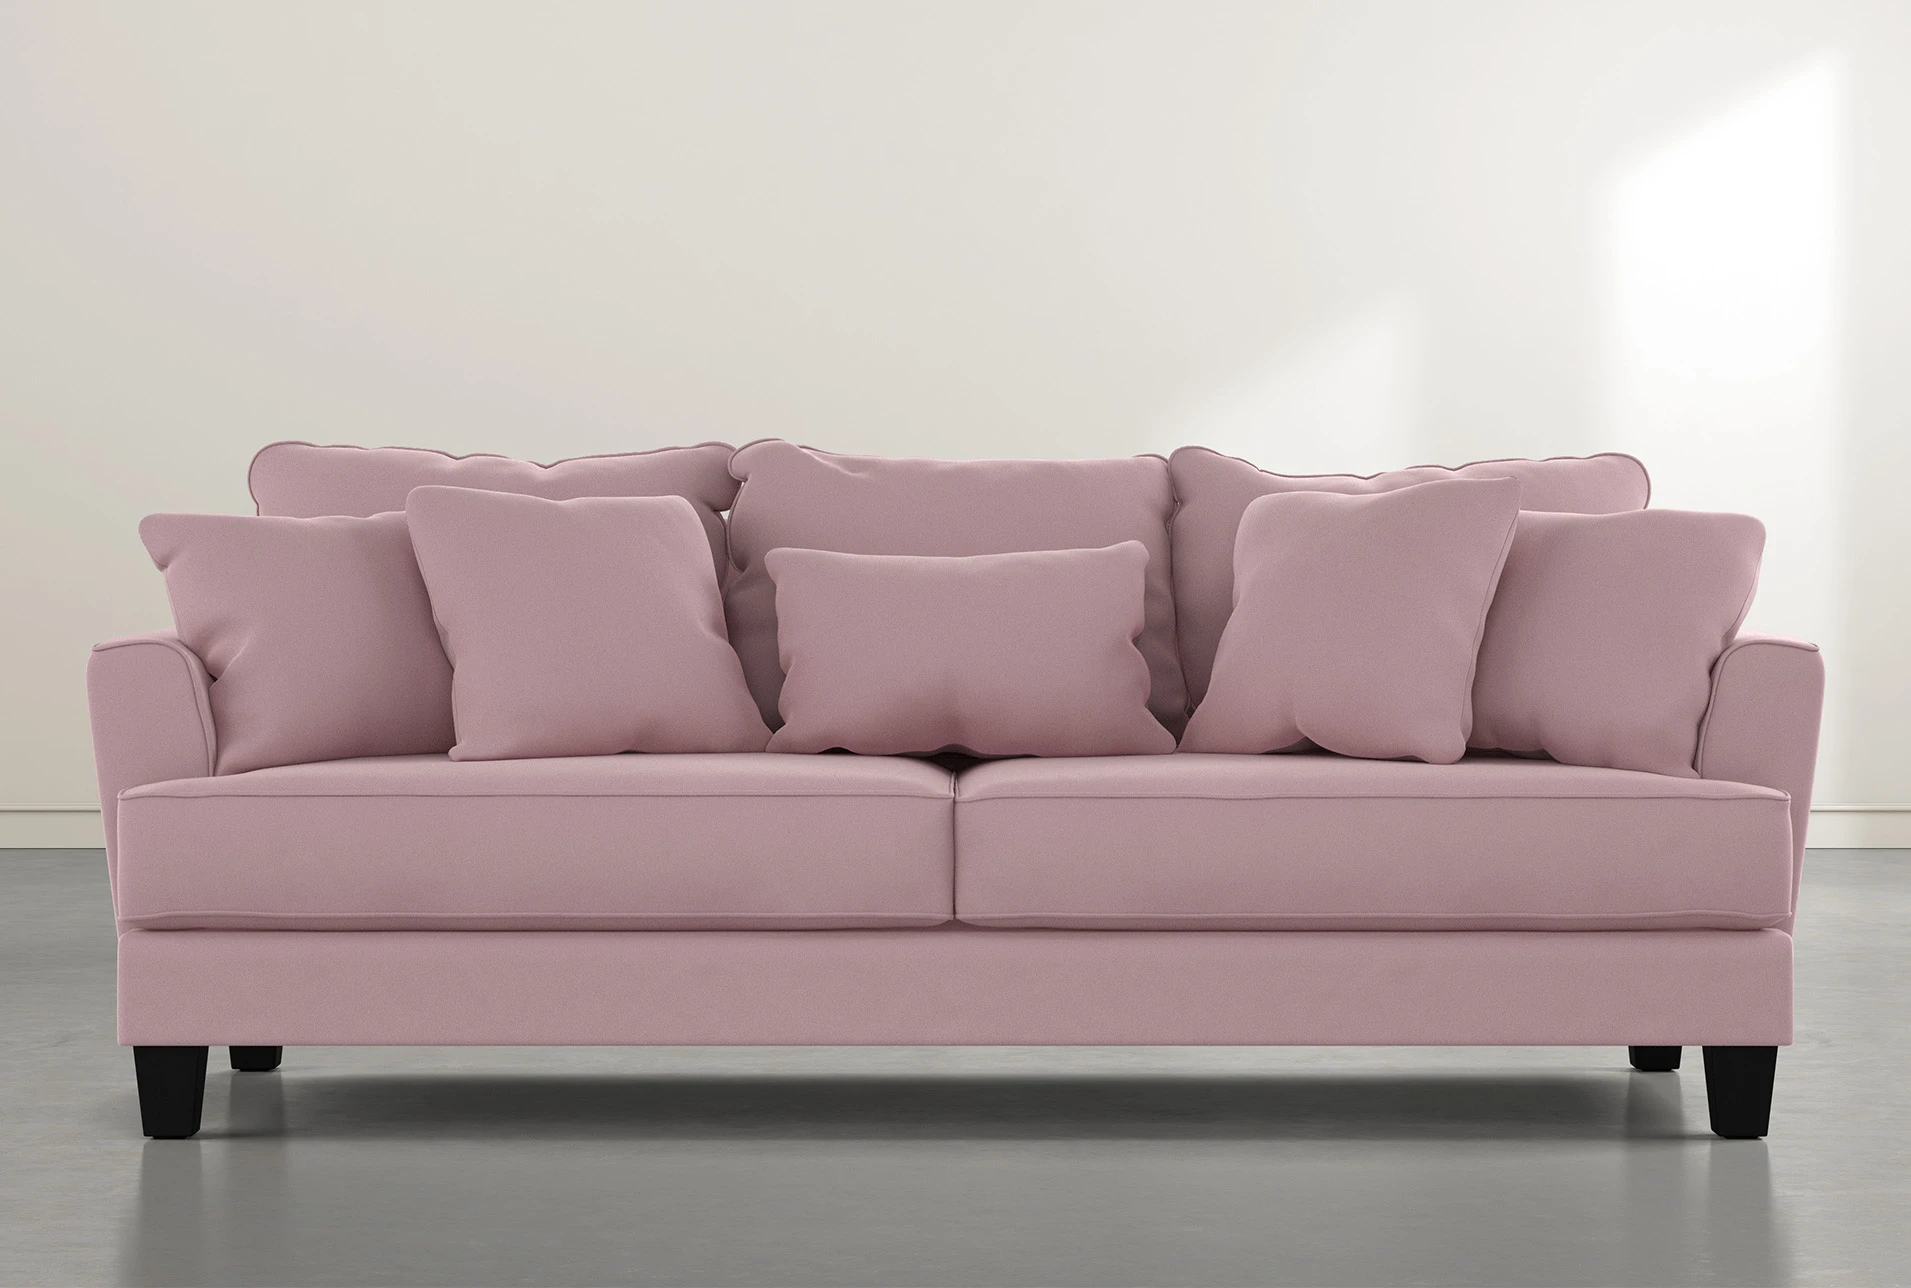 pink sofa bed gumtree